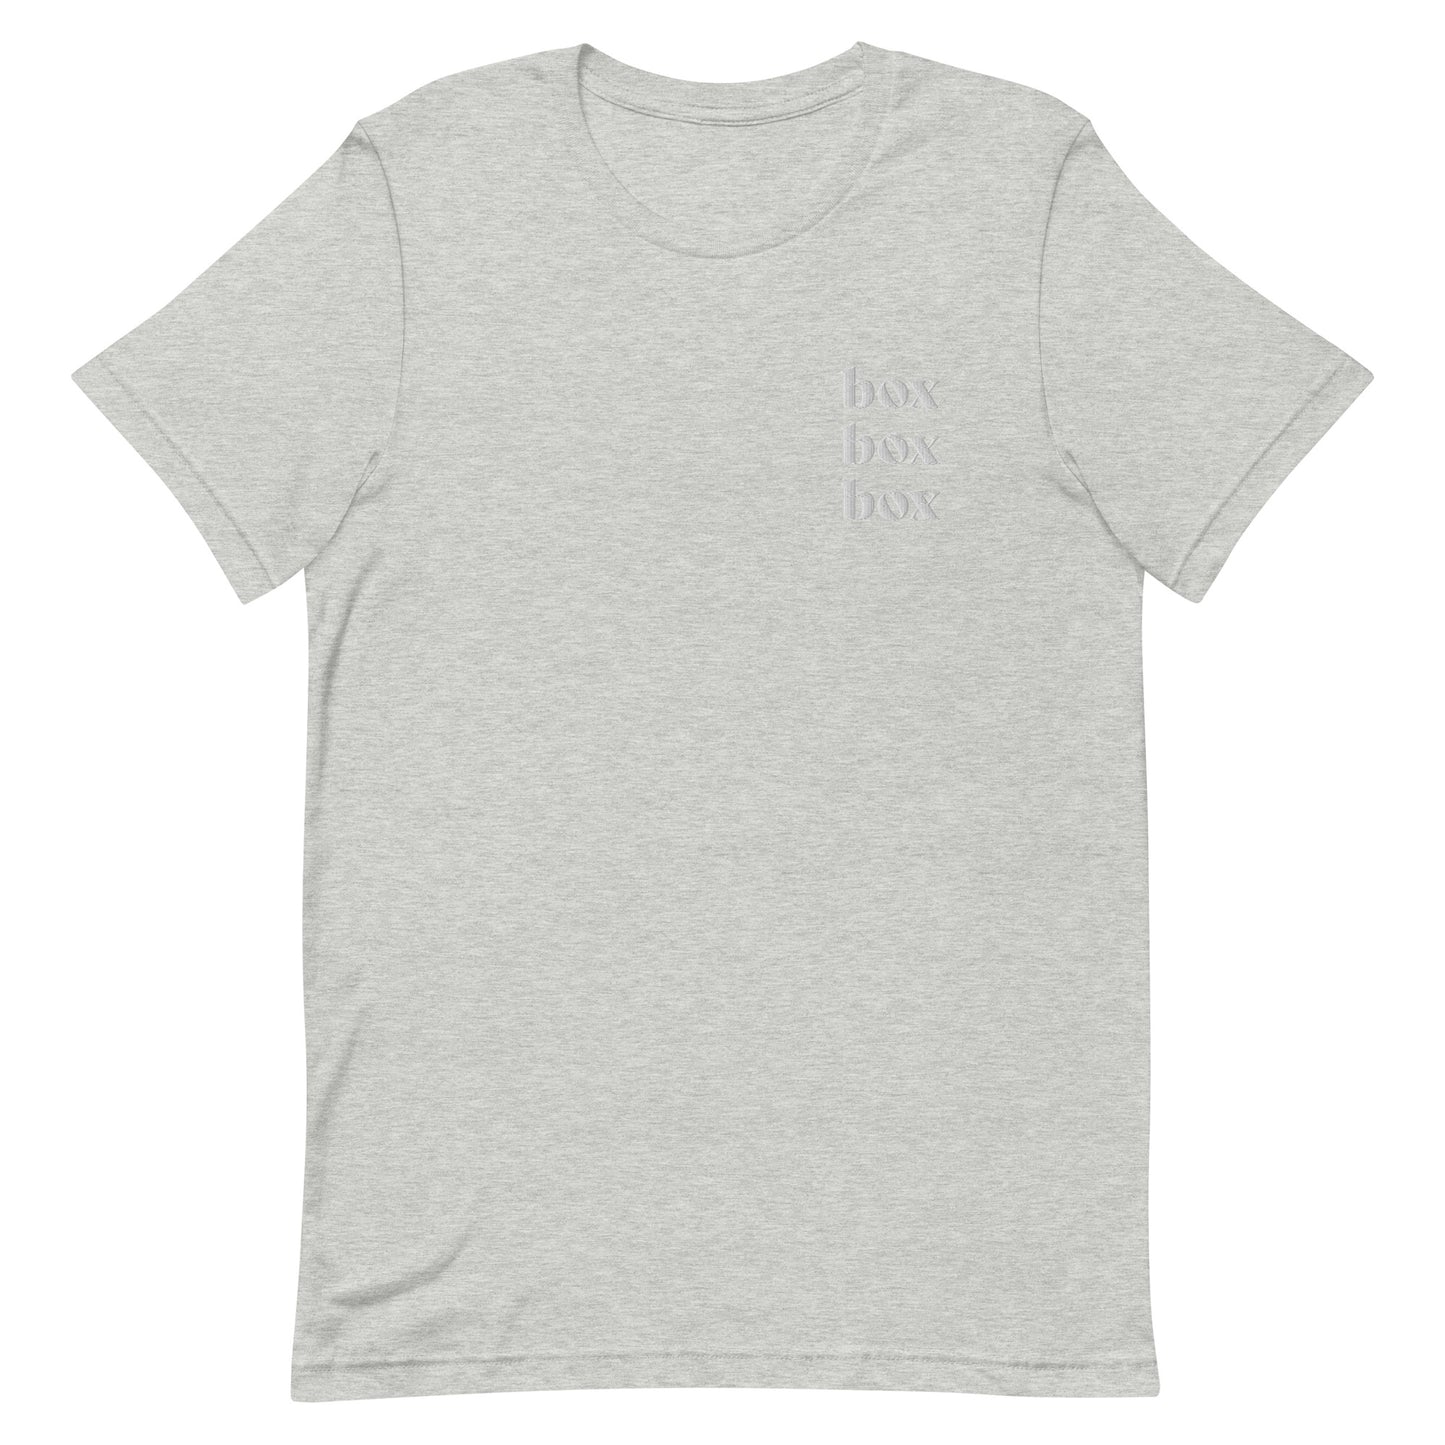 Box Box Box Embroidered Shirt (white text)